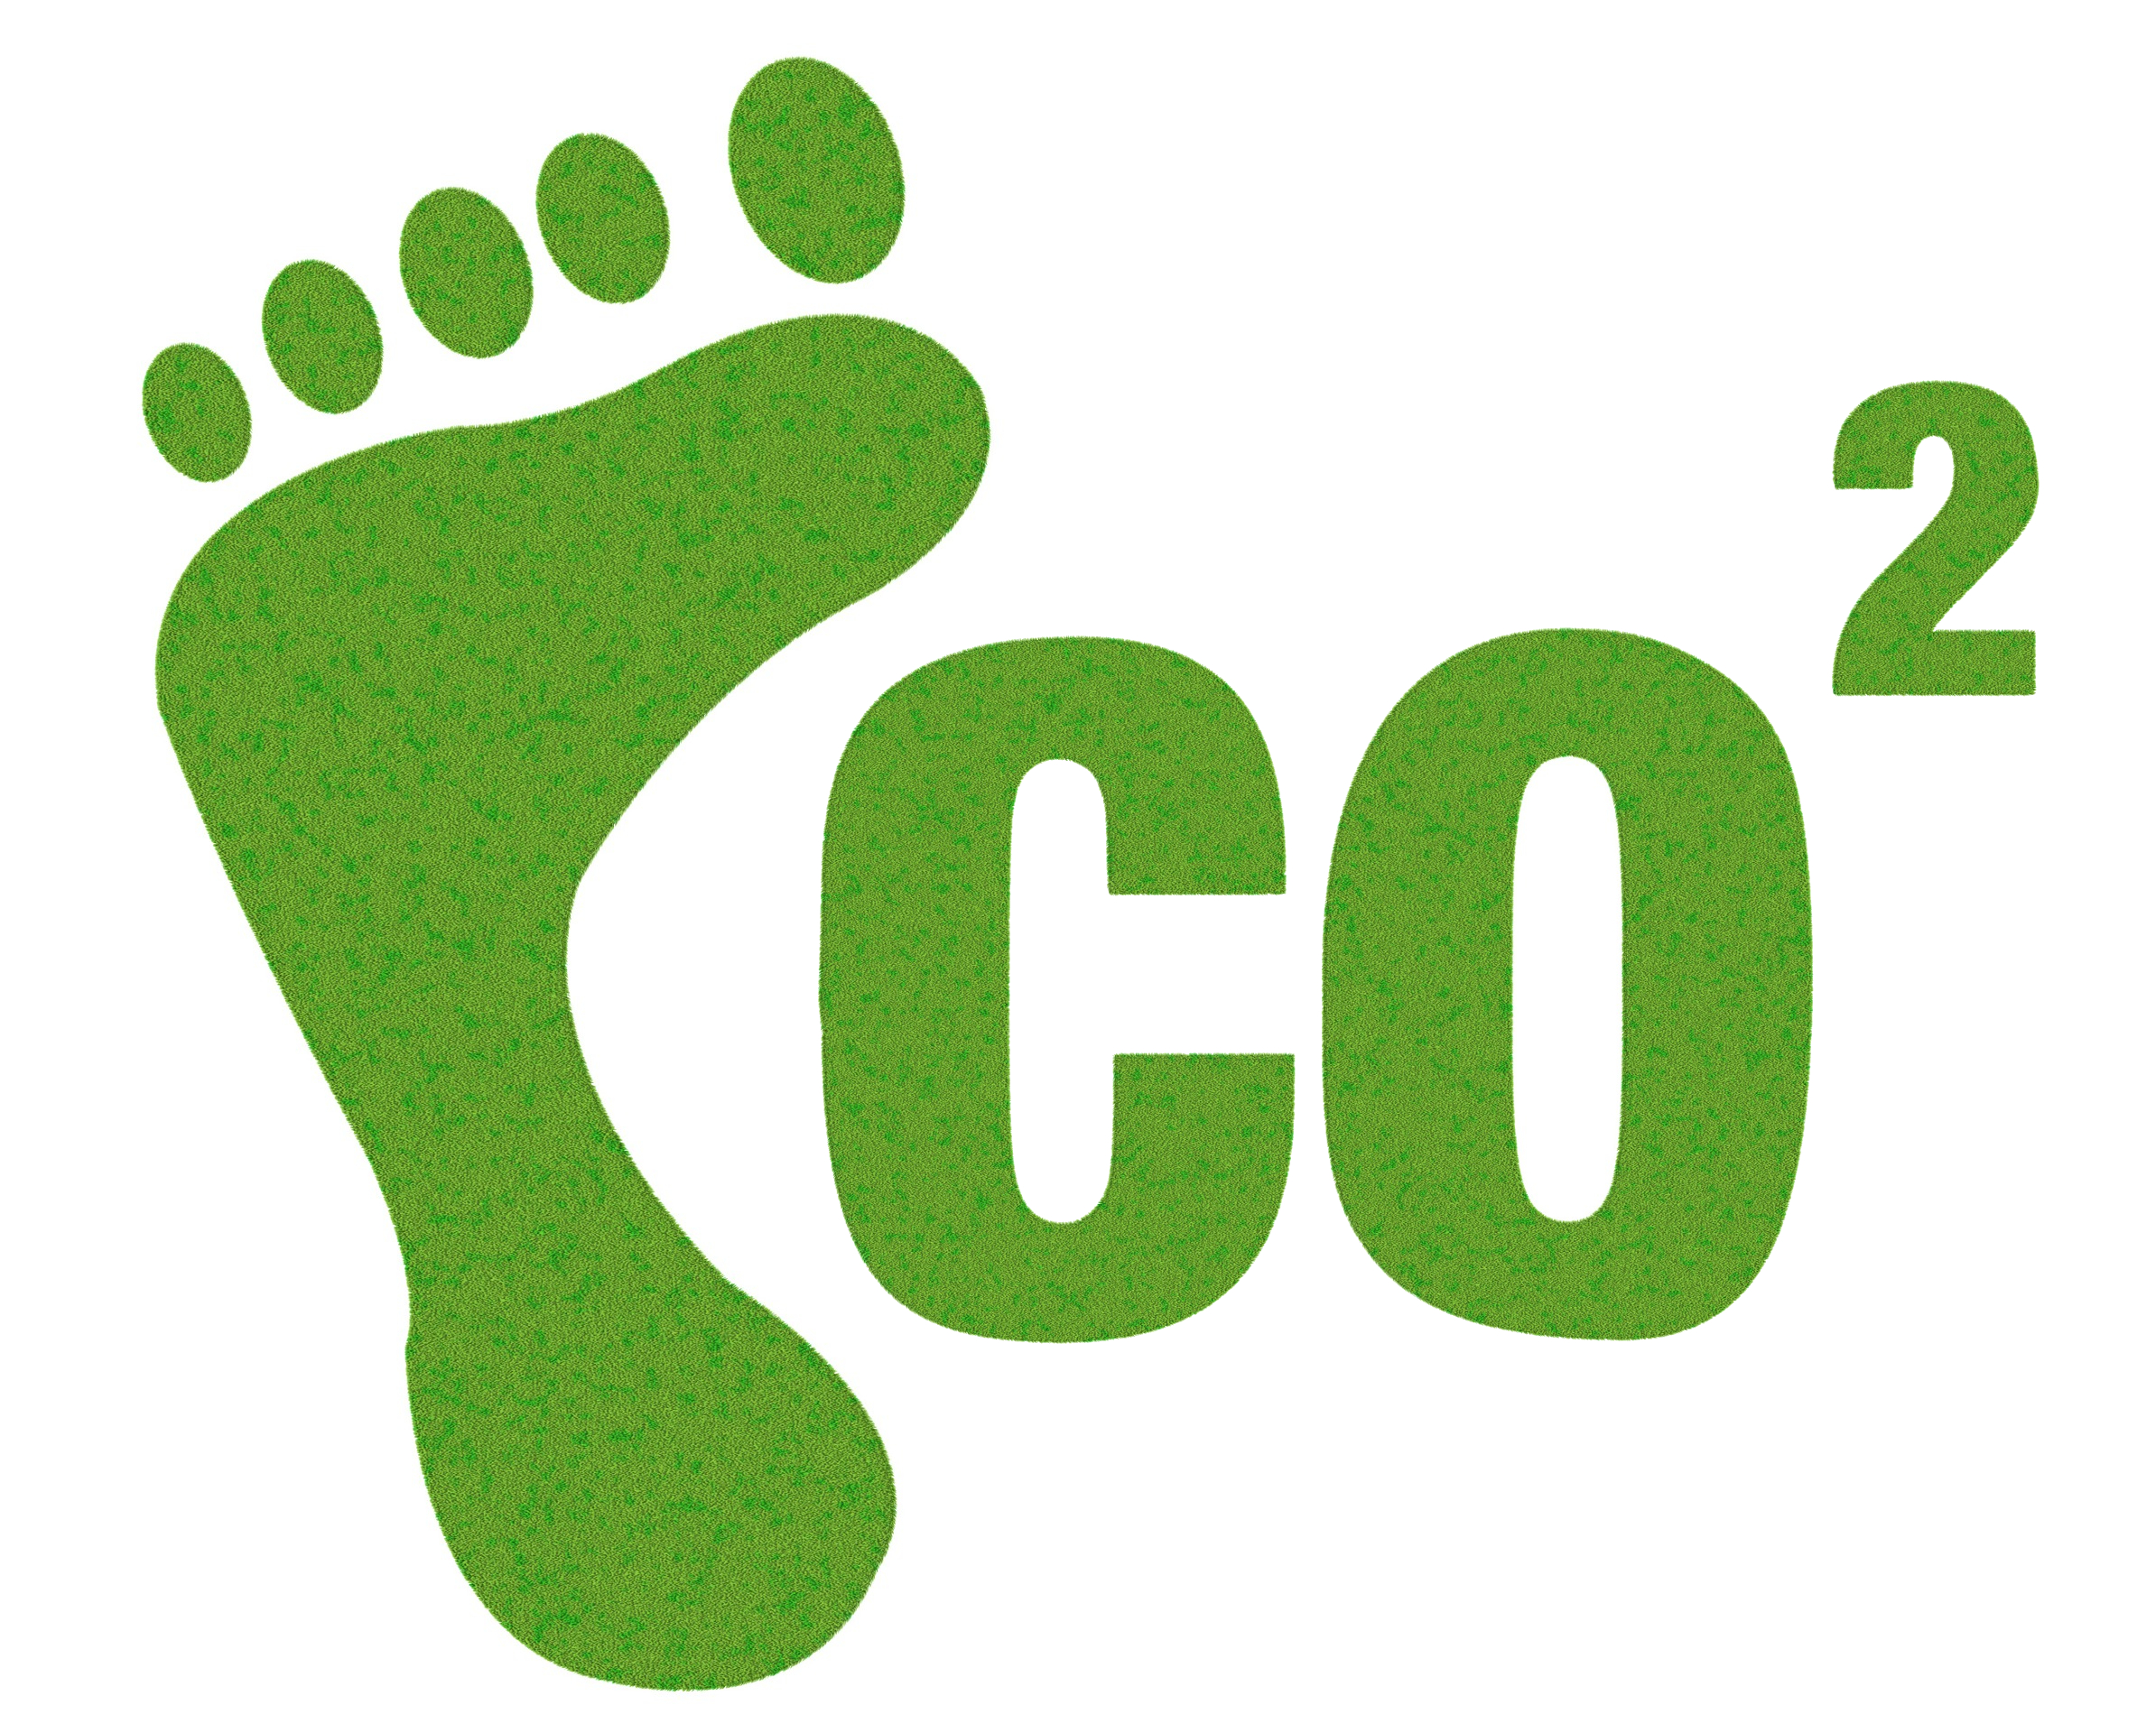 CO2 footprint of hotels